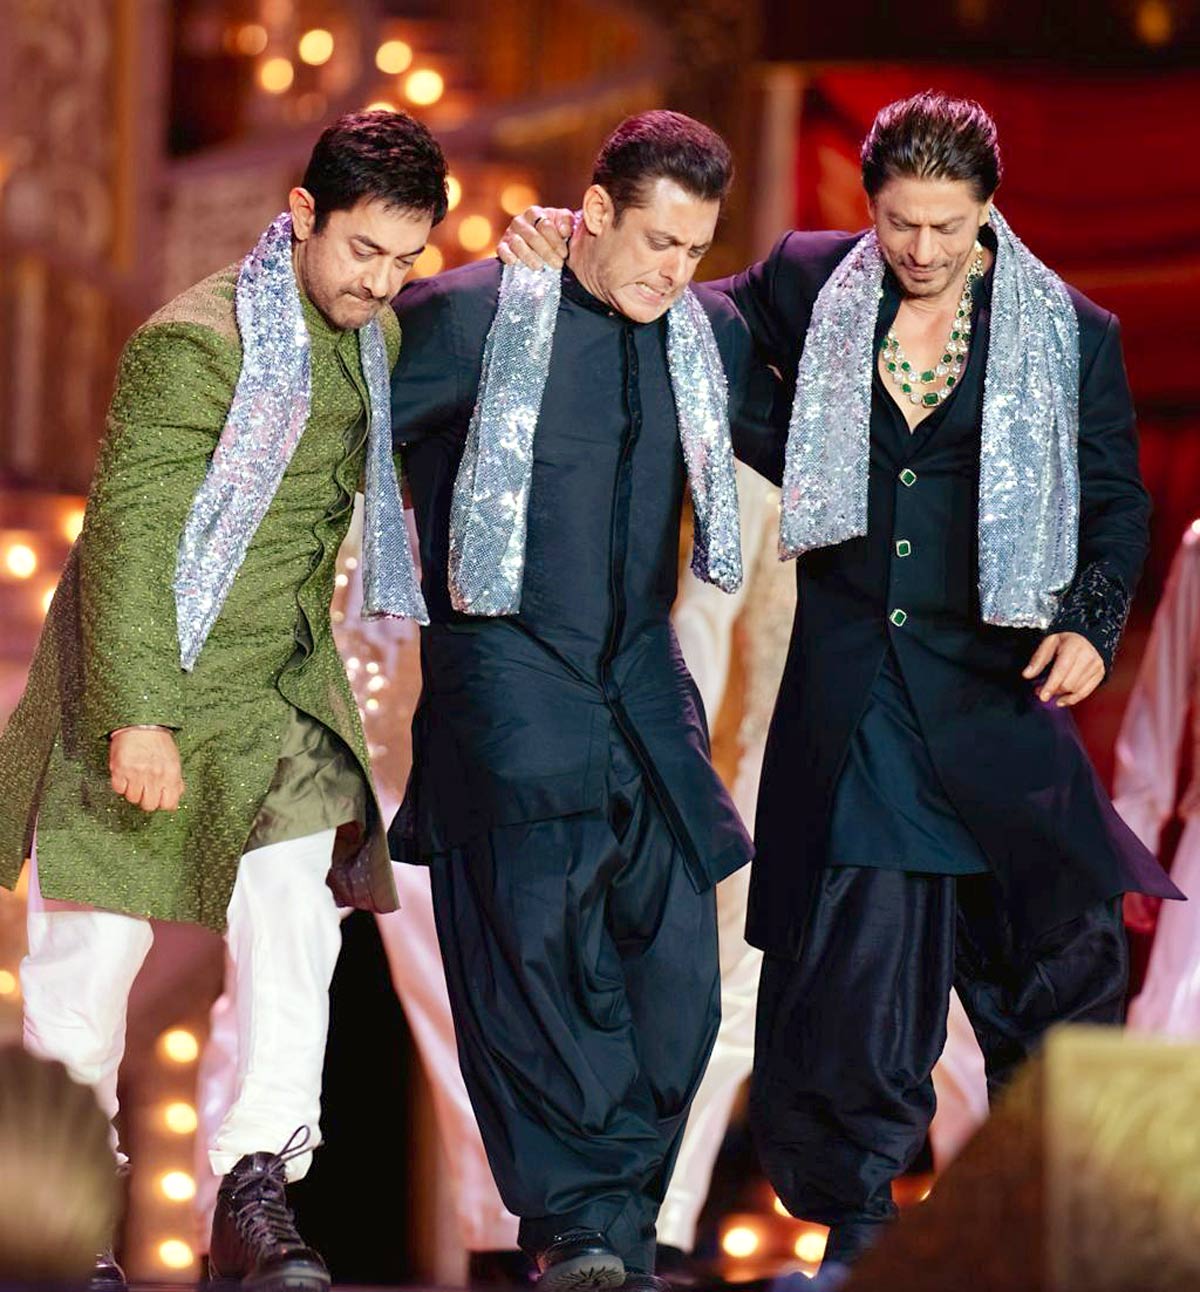 SRK, Salman, Aamir Dance To Naatu Naatu